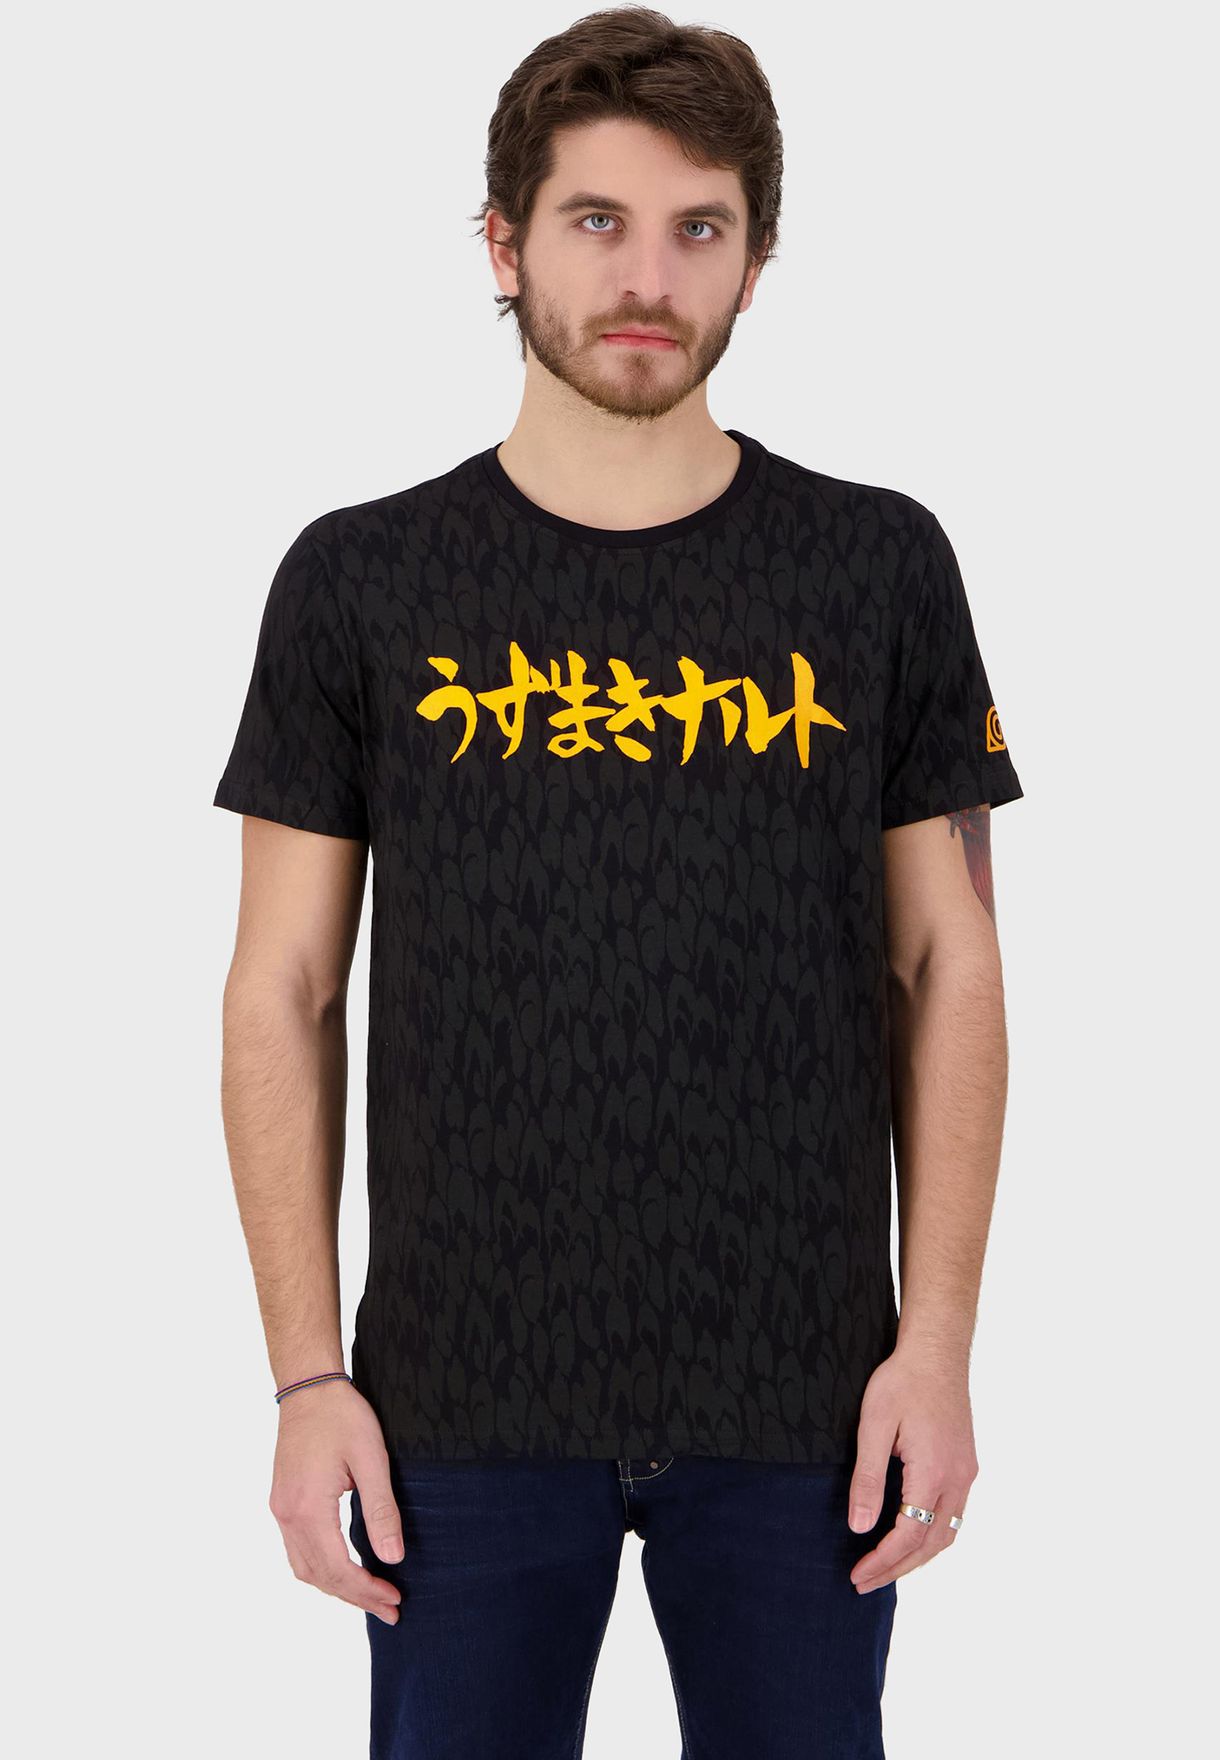 Naruto Shippuden Crew Neck T-Shirt